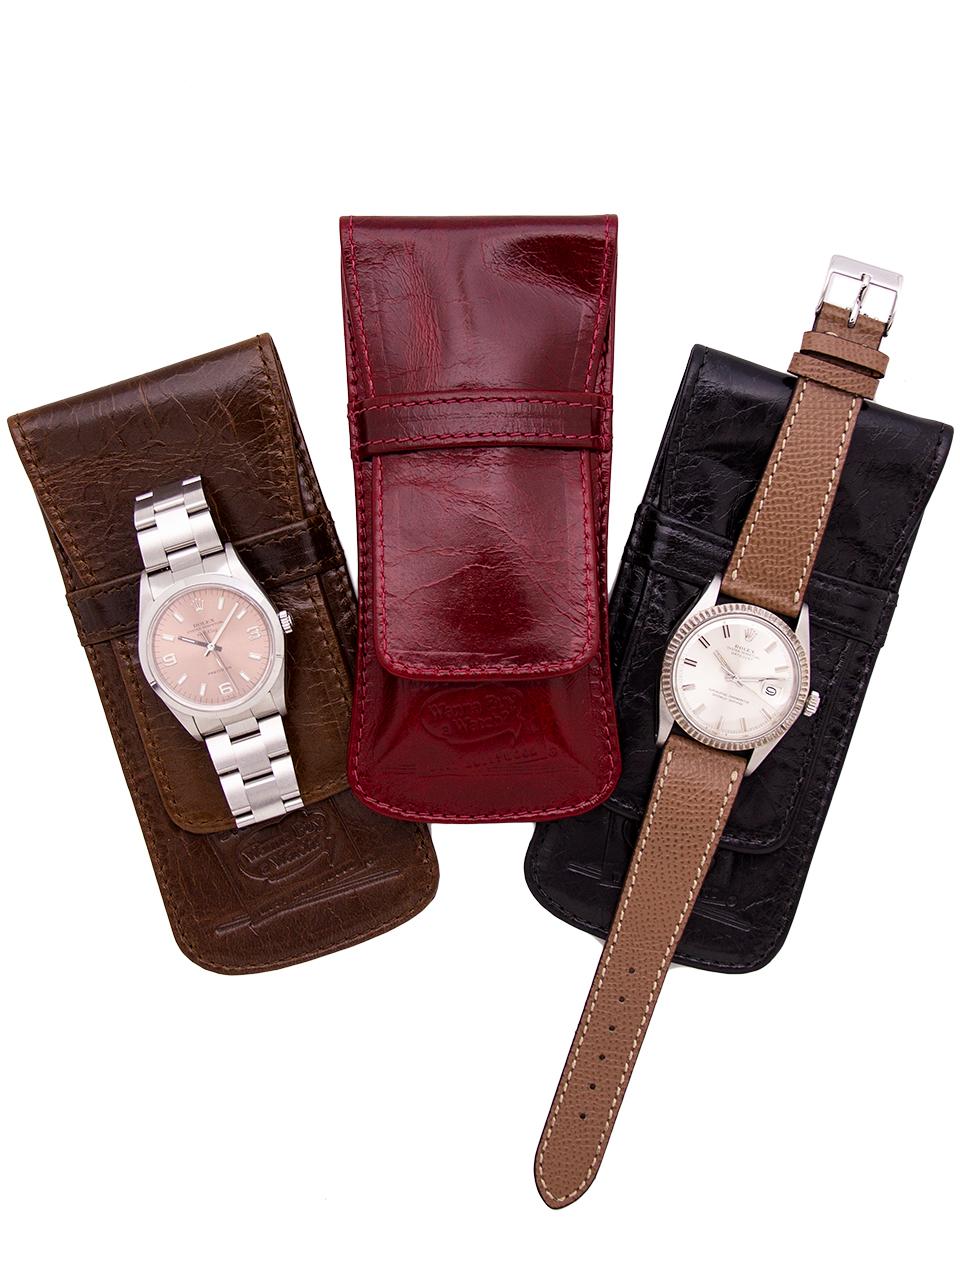 Rolex Stainless Steel Precision Dress Model manual wind wristwatch, circa 1969 1